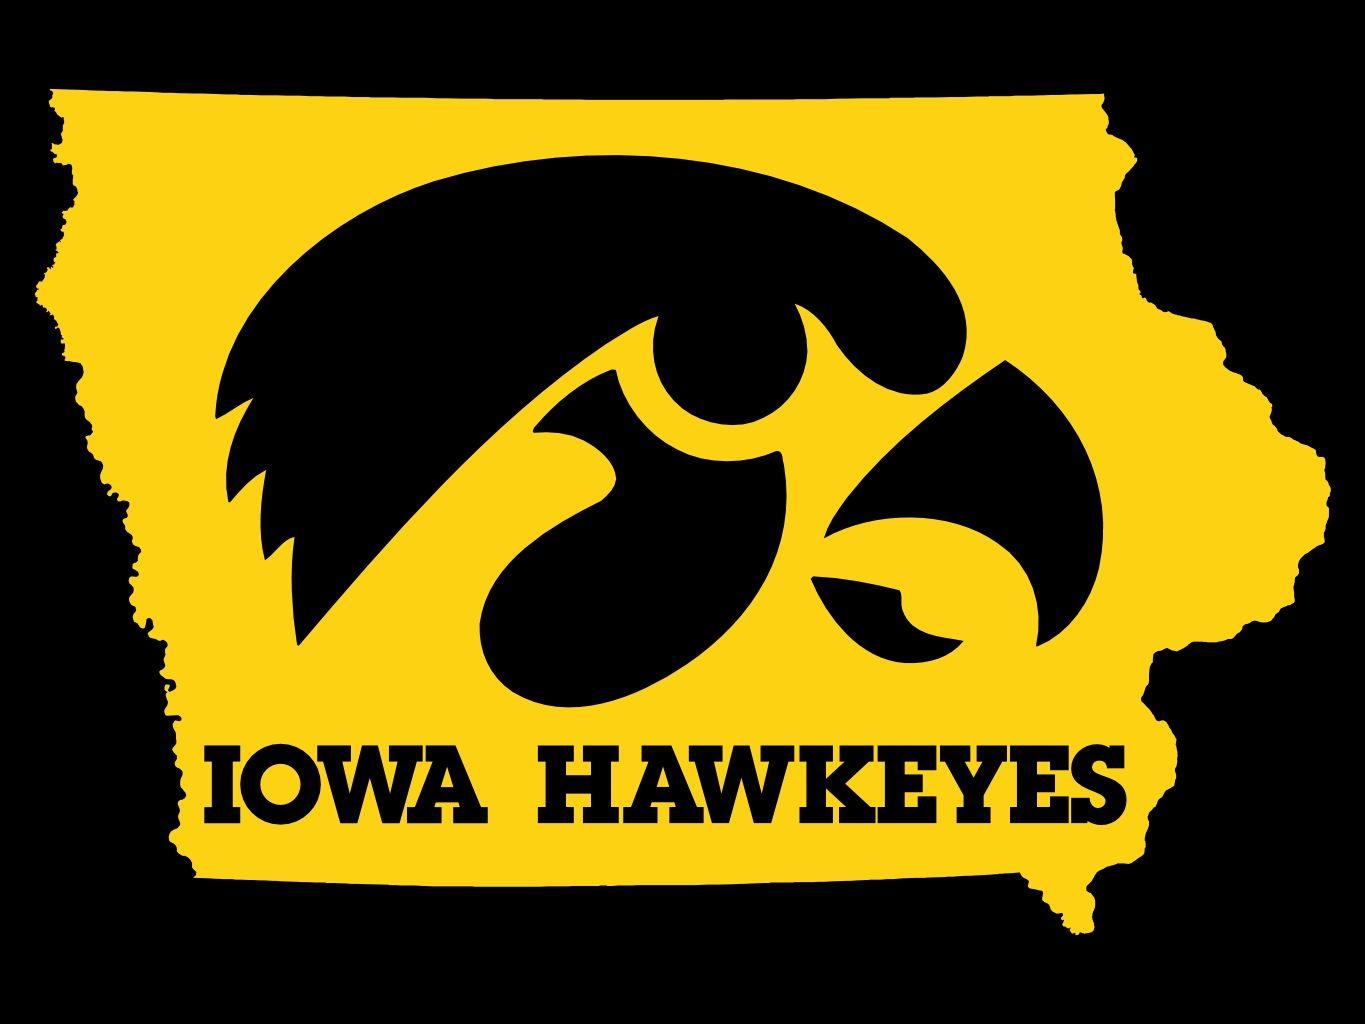 Iowa Hawkeye Wallpapers - Top Free Iowa